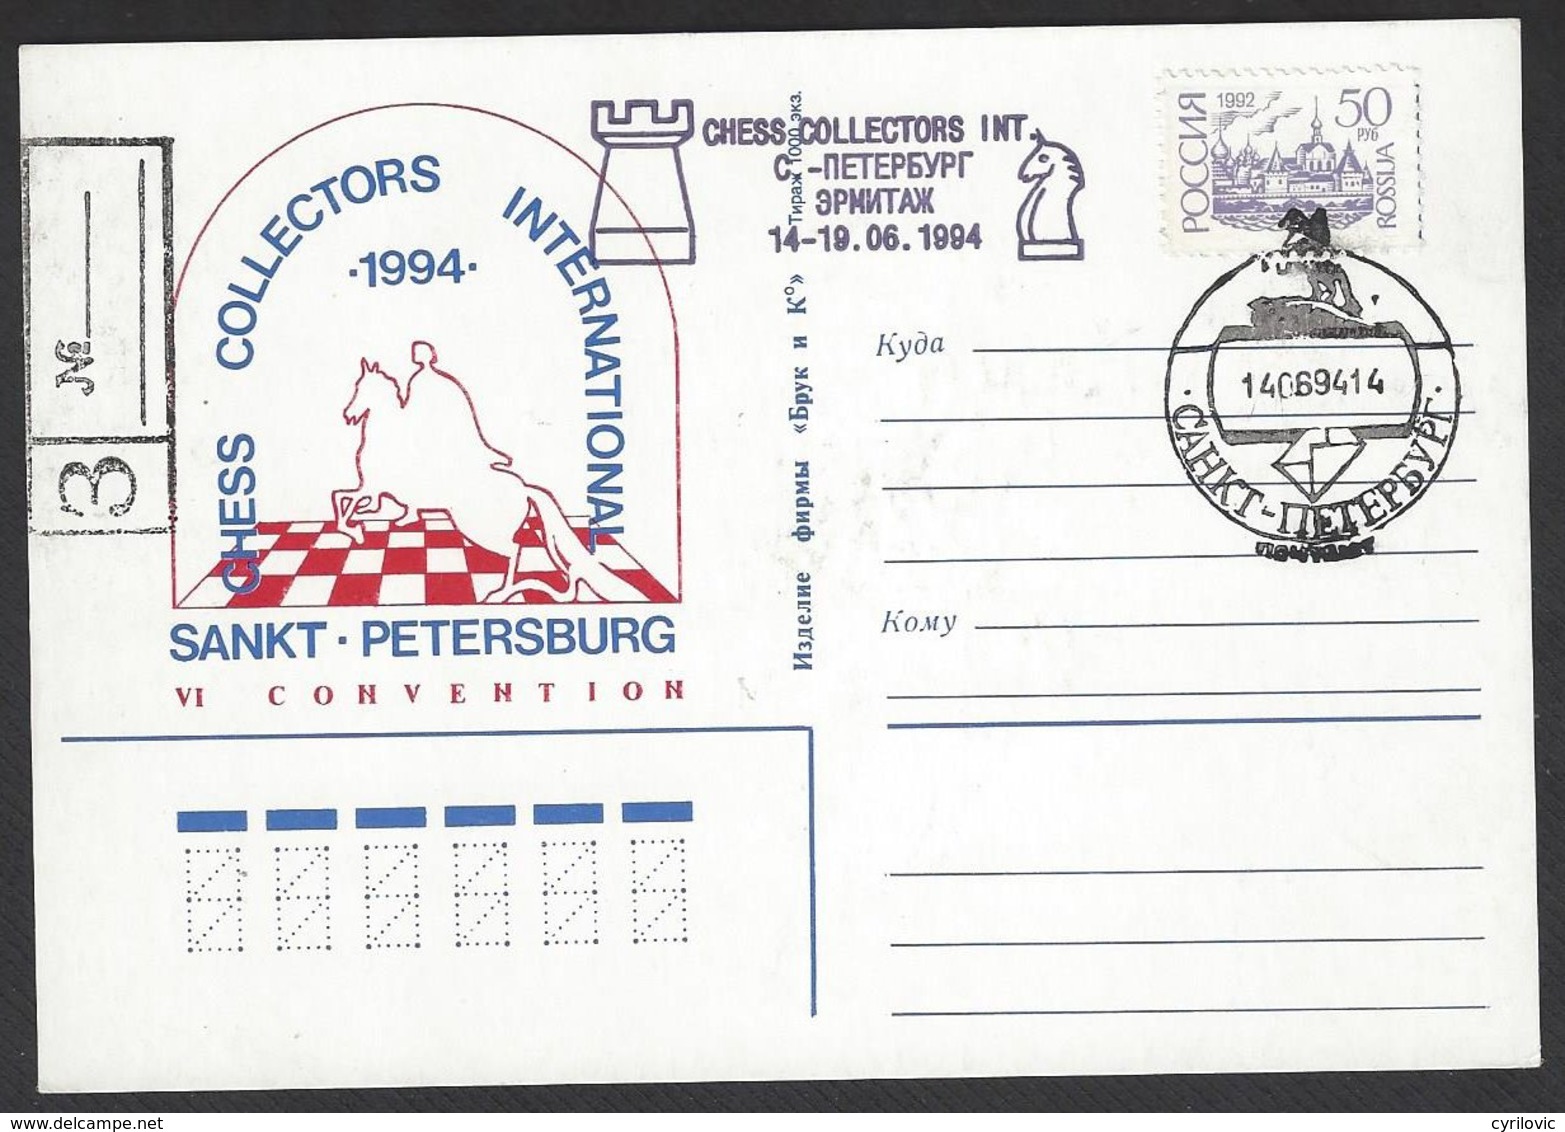 Chess, Russia St Petersburg, June 1994, Secondary Slogan On Card, Chess Collectors International Meeting - Schaken